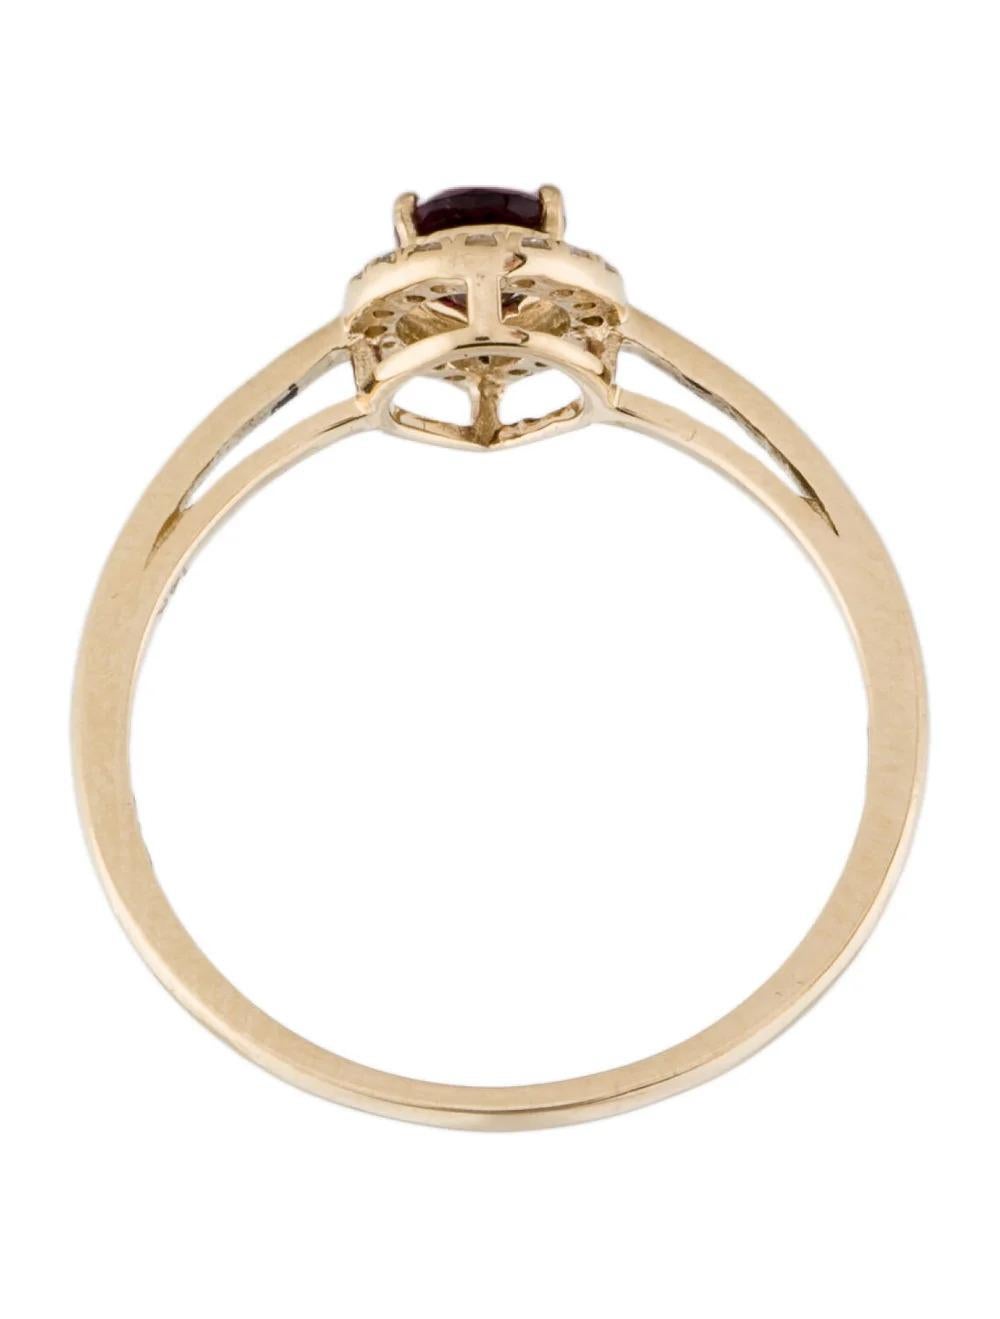 Women's 14K Tourmaline & Diamond Cocktail Ring - Size 7.25 - Vibrant Gemstone, Luxury For Sale